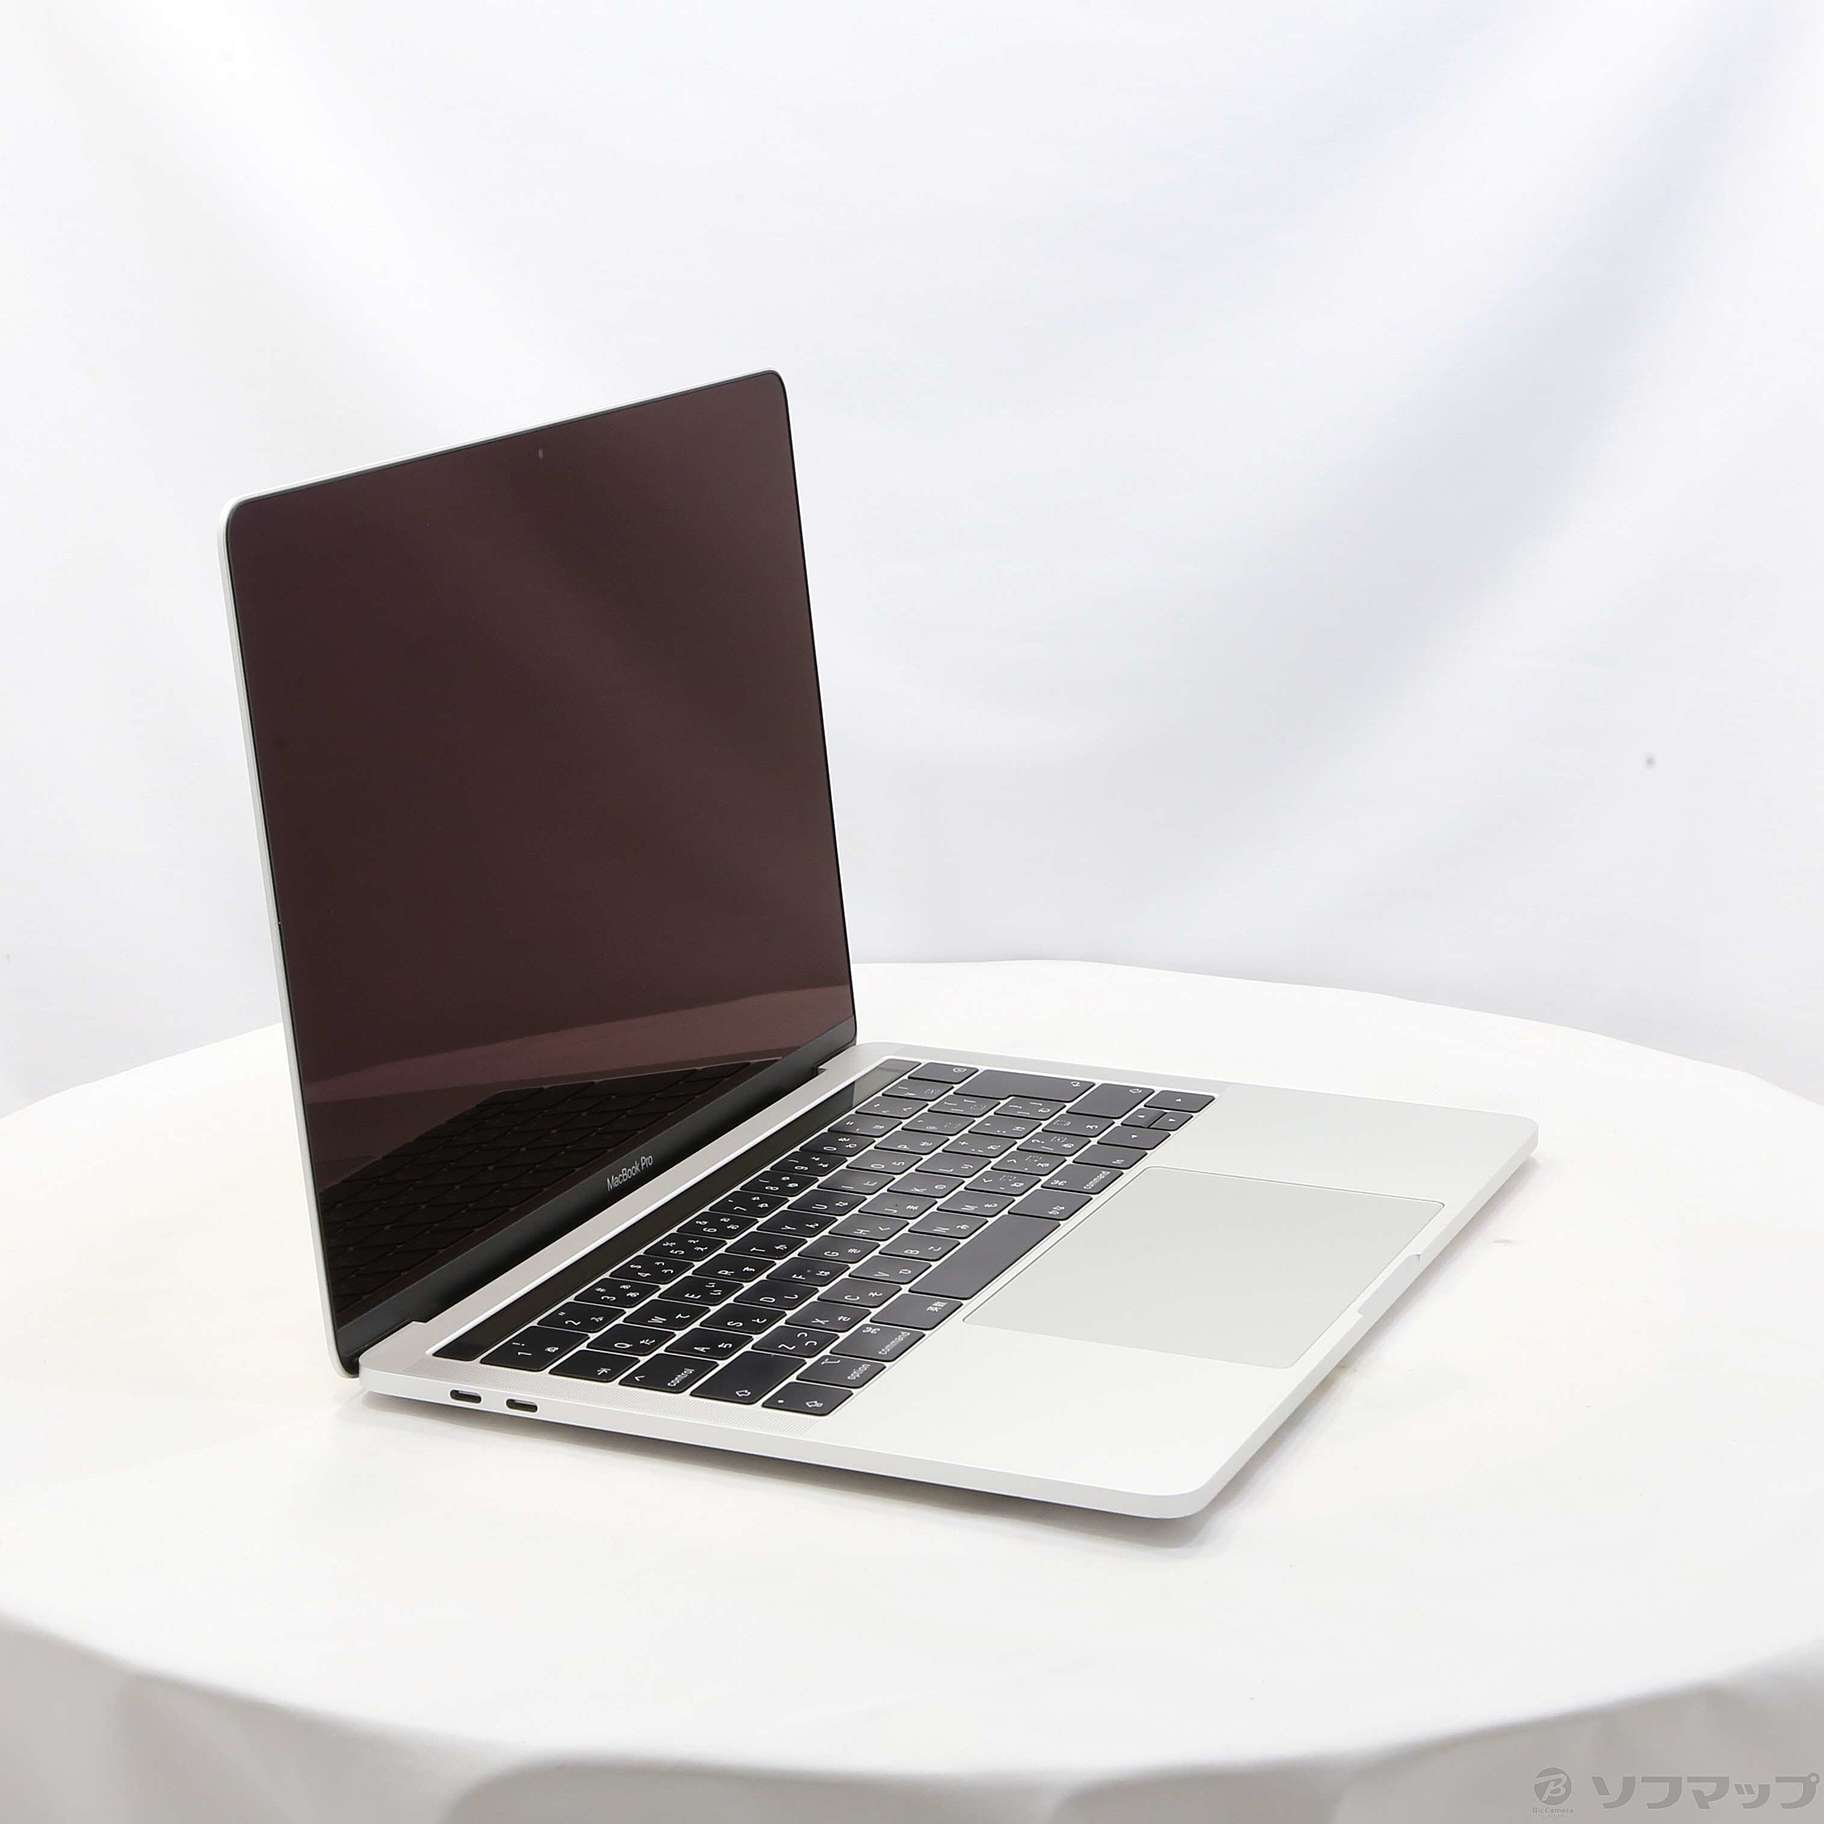 APPLE MacBook Pro MR9U2J/A